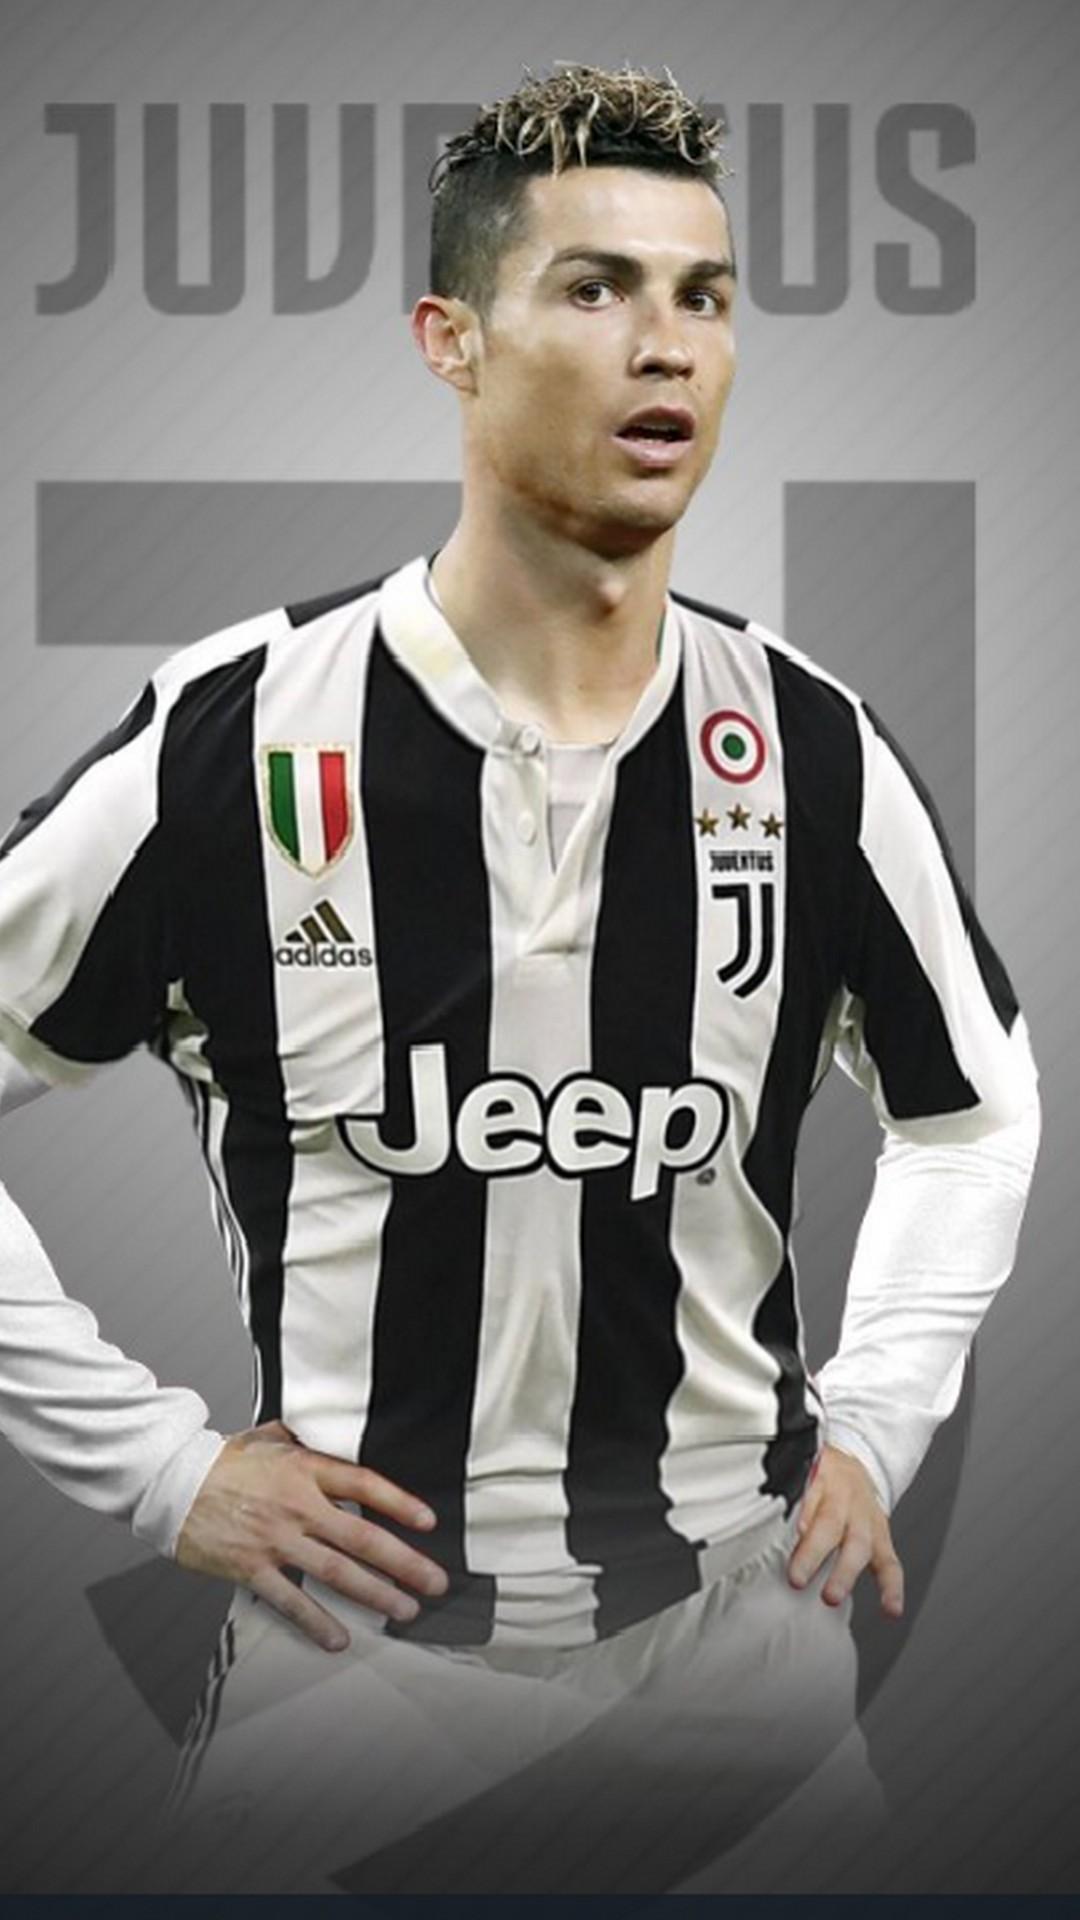 Wallpaper Cristiano Ronaldo Juventus Android Android